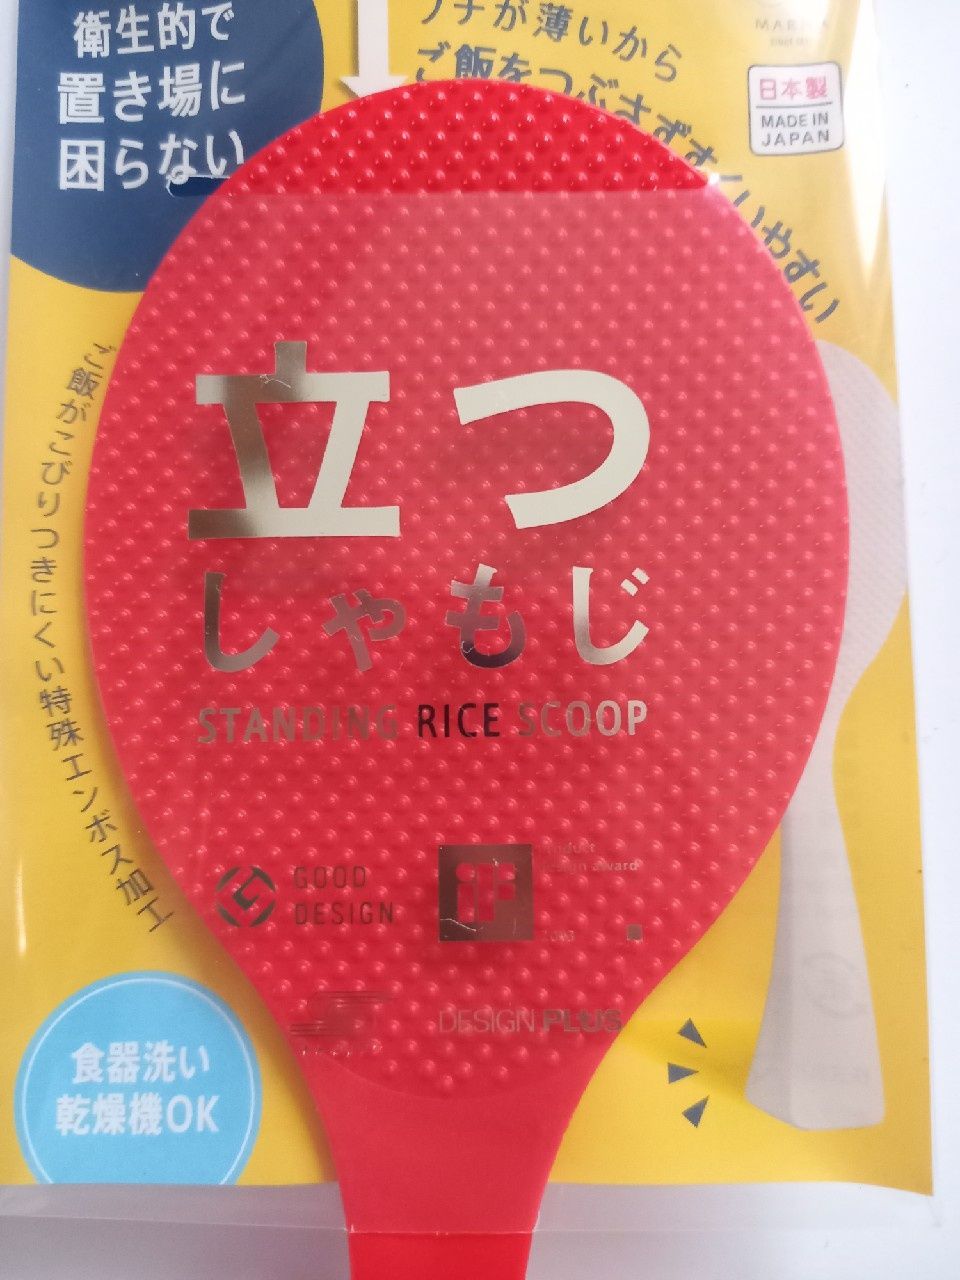 Designerska łyżka do ryżu Made in Japan